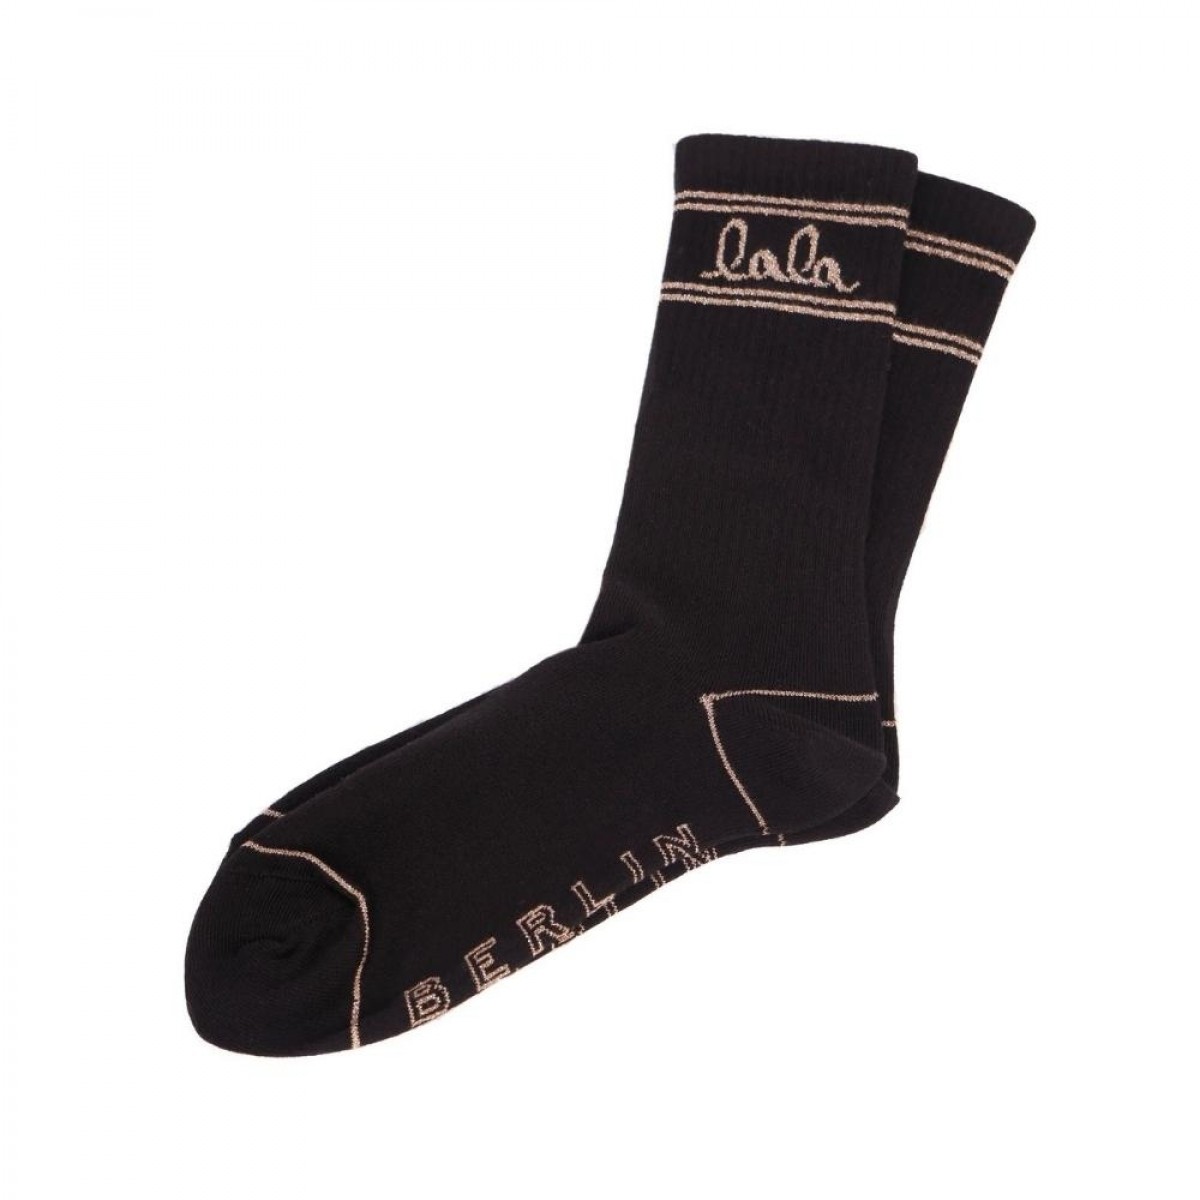 socks alja - black - side liggende